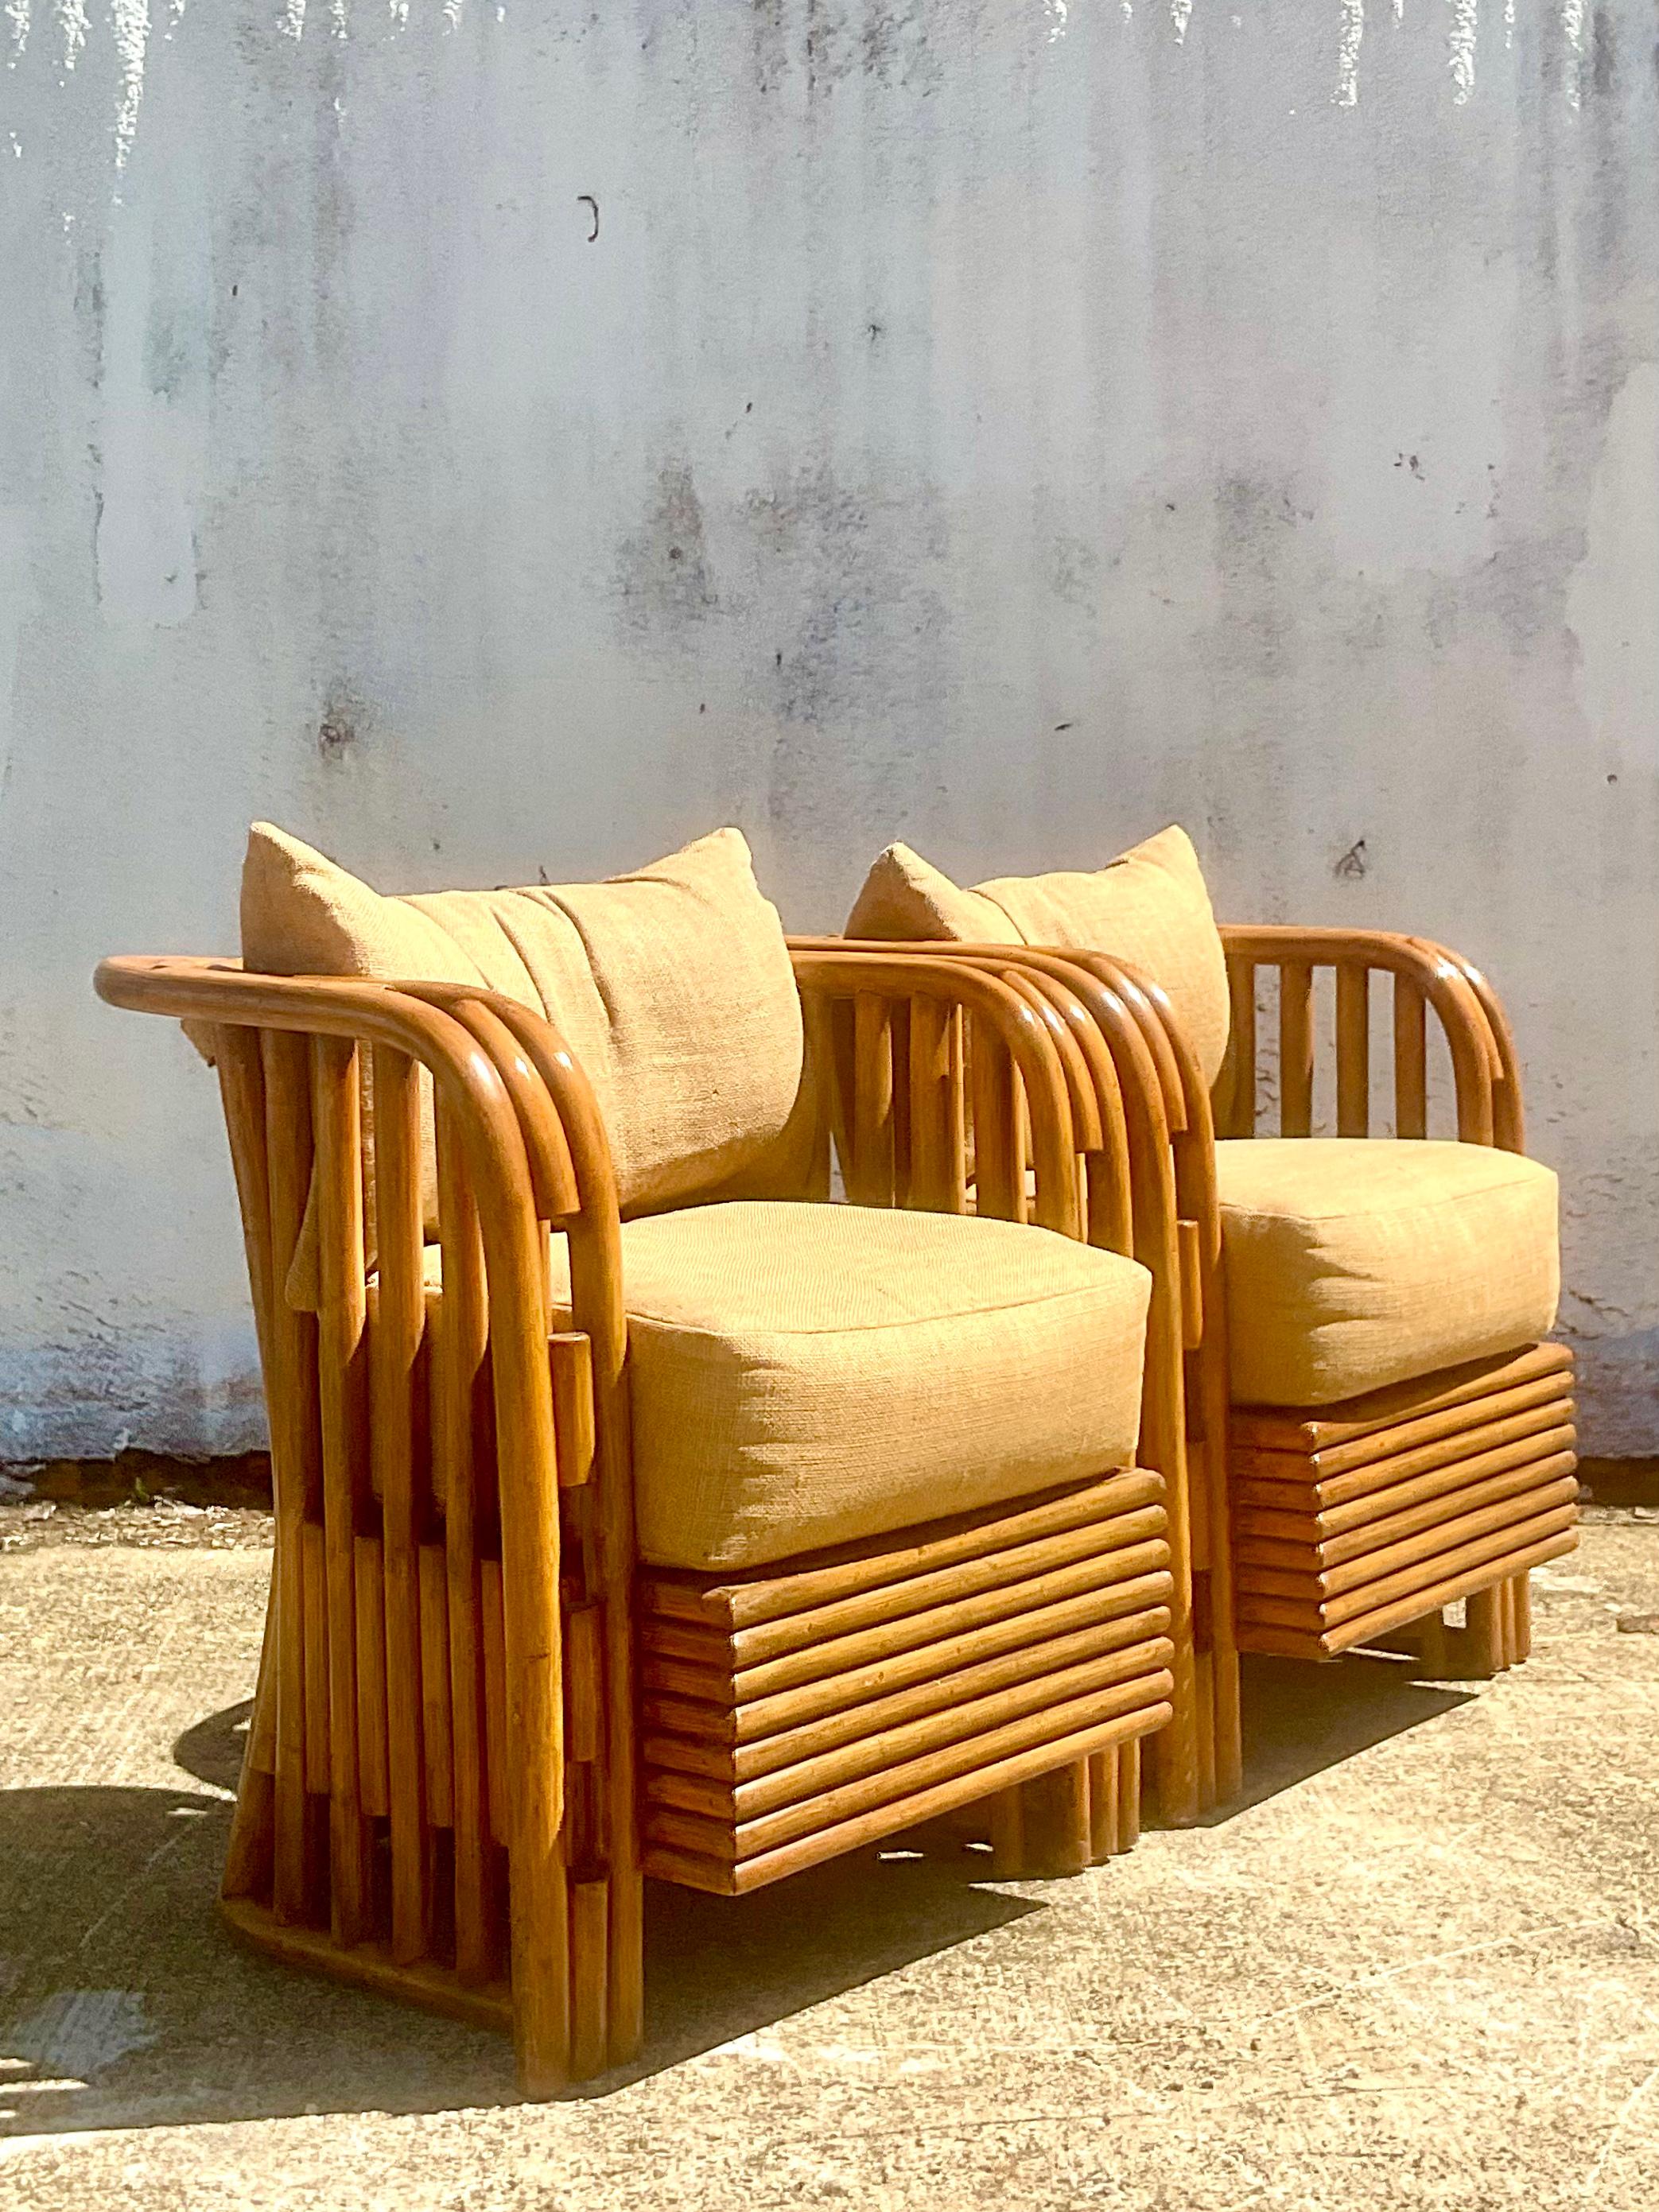 vintage rattan furniture -china -b2b -forum -blog -wikipedia -.cn -.gov -alibaba